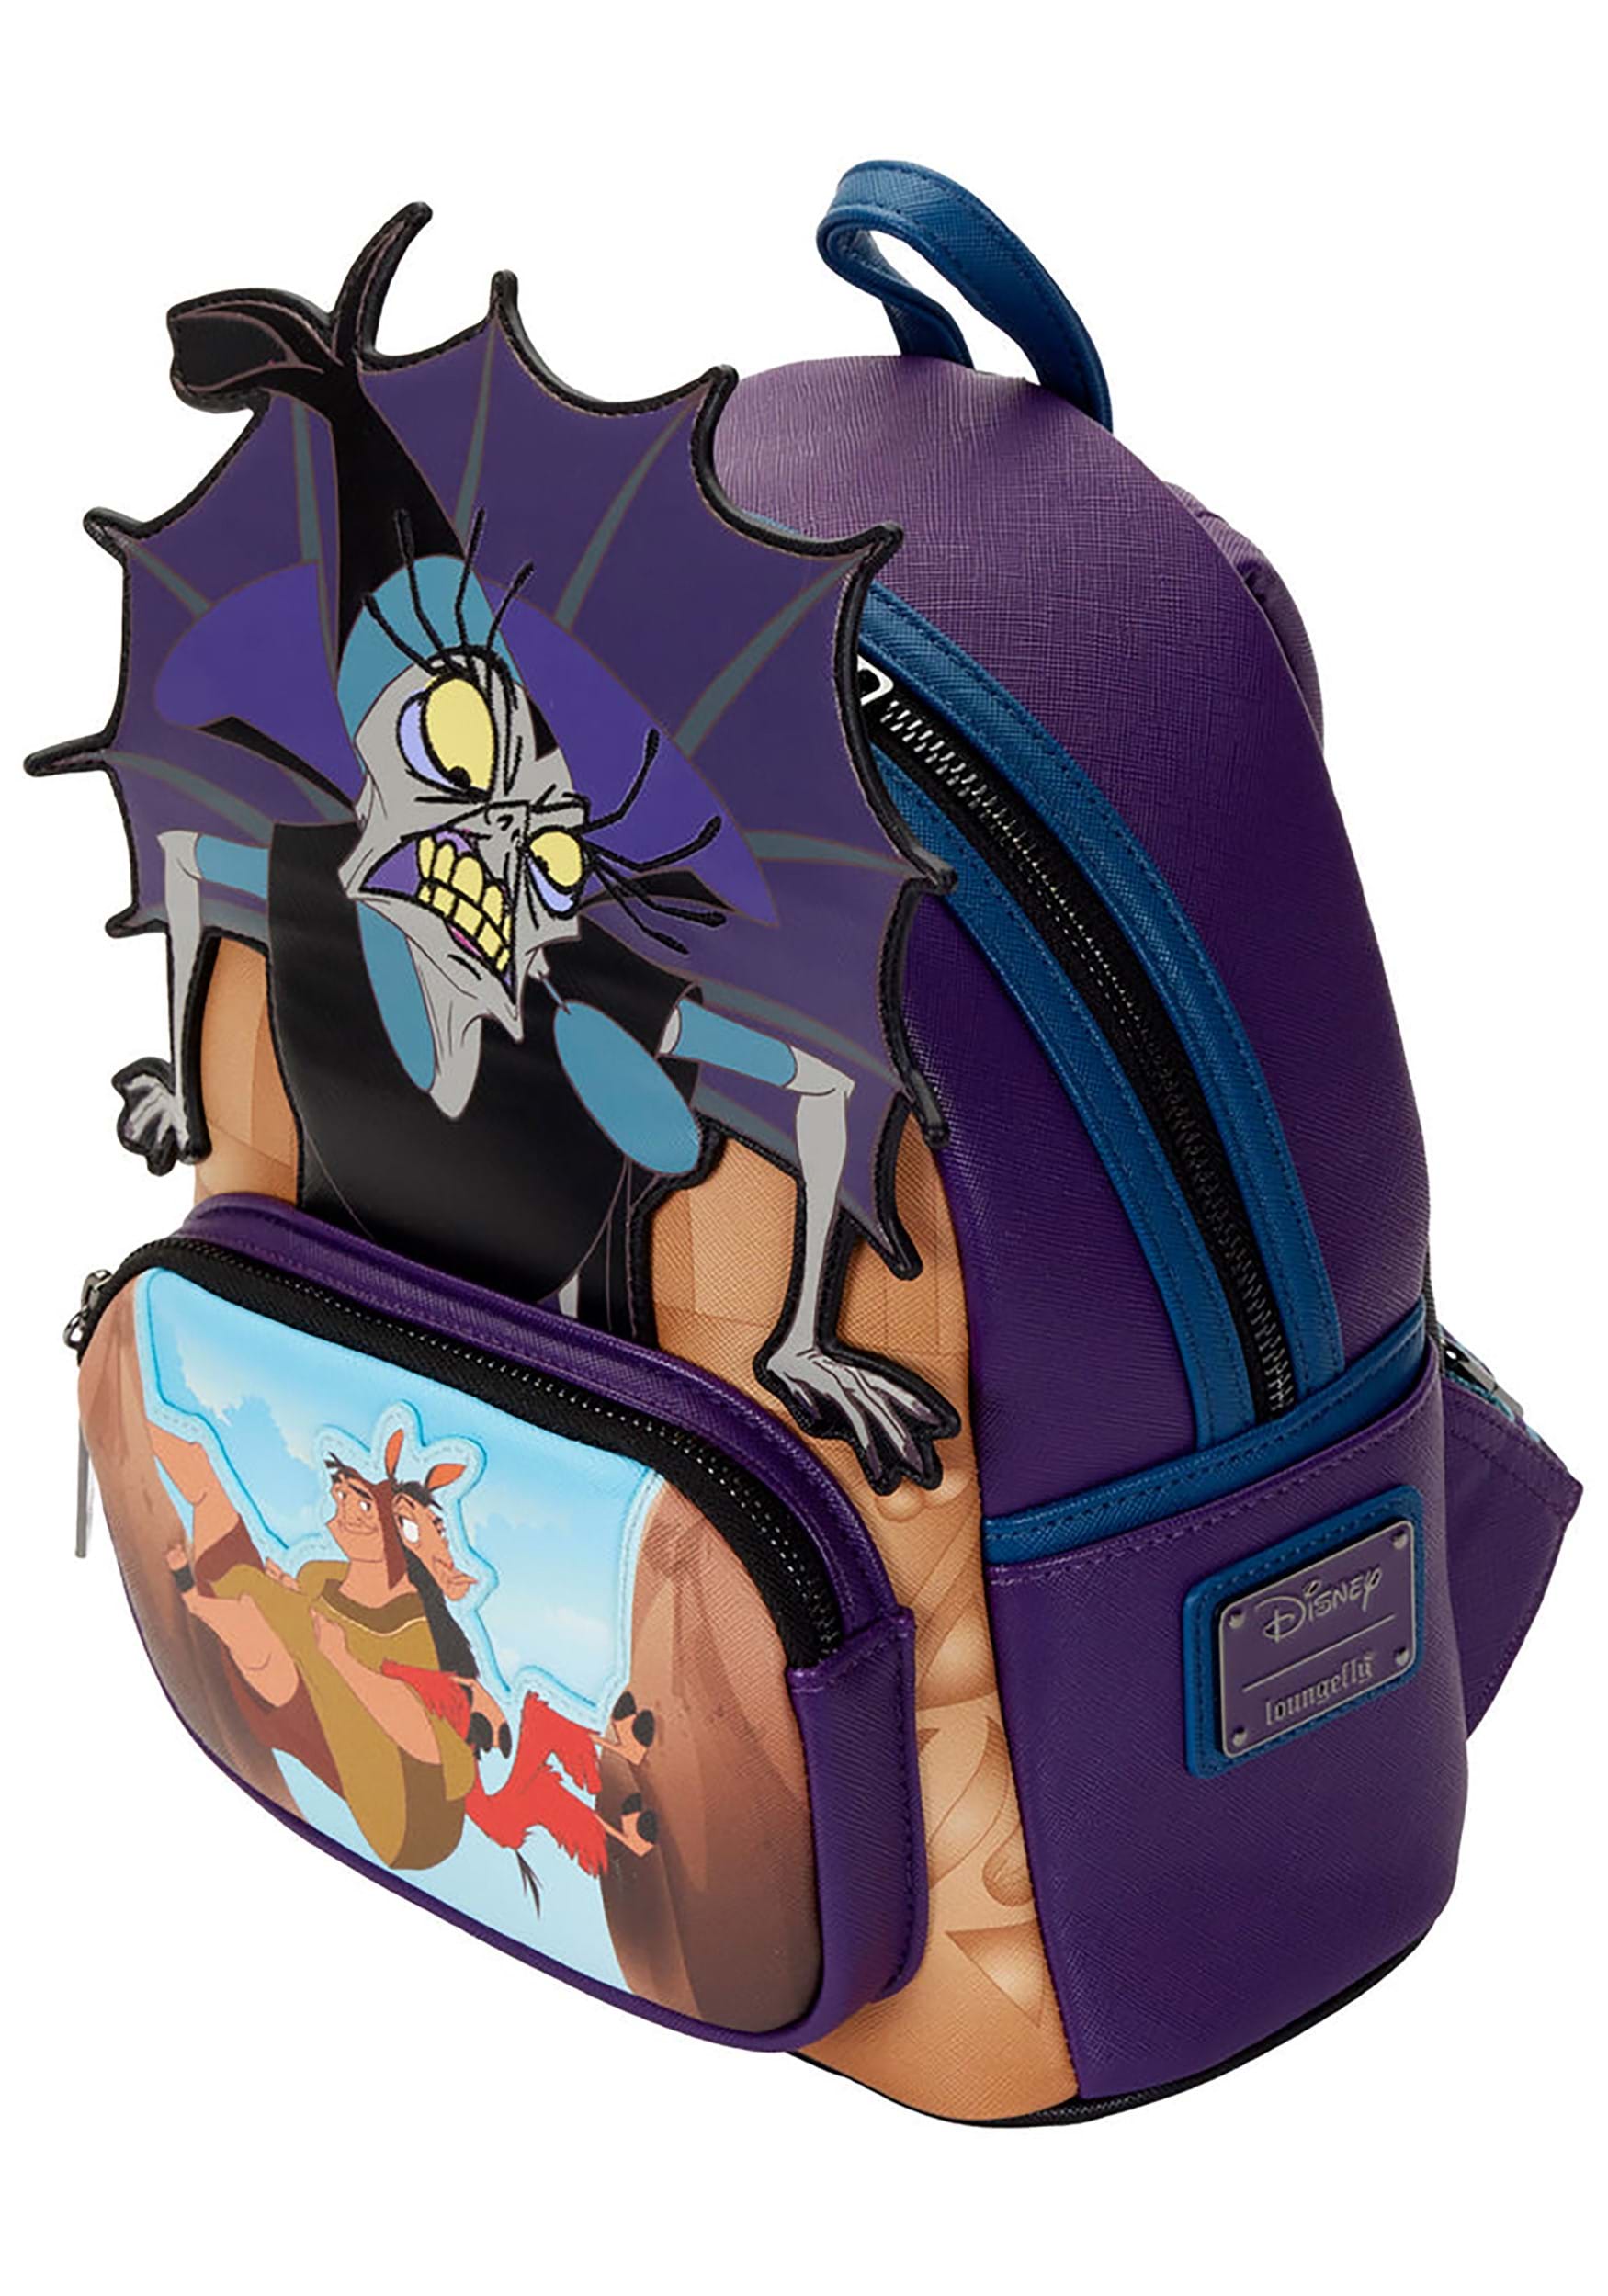 Sleeping Beauty: Princess Scene Loungefly Mini Backpack